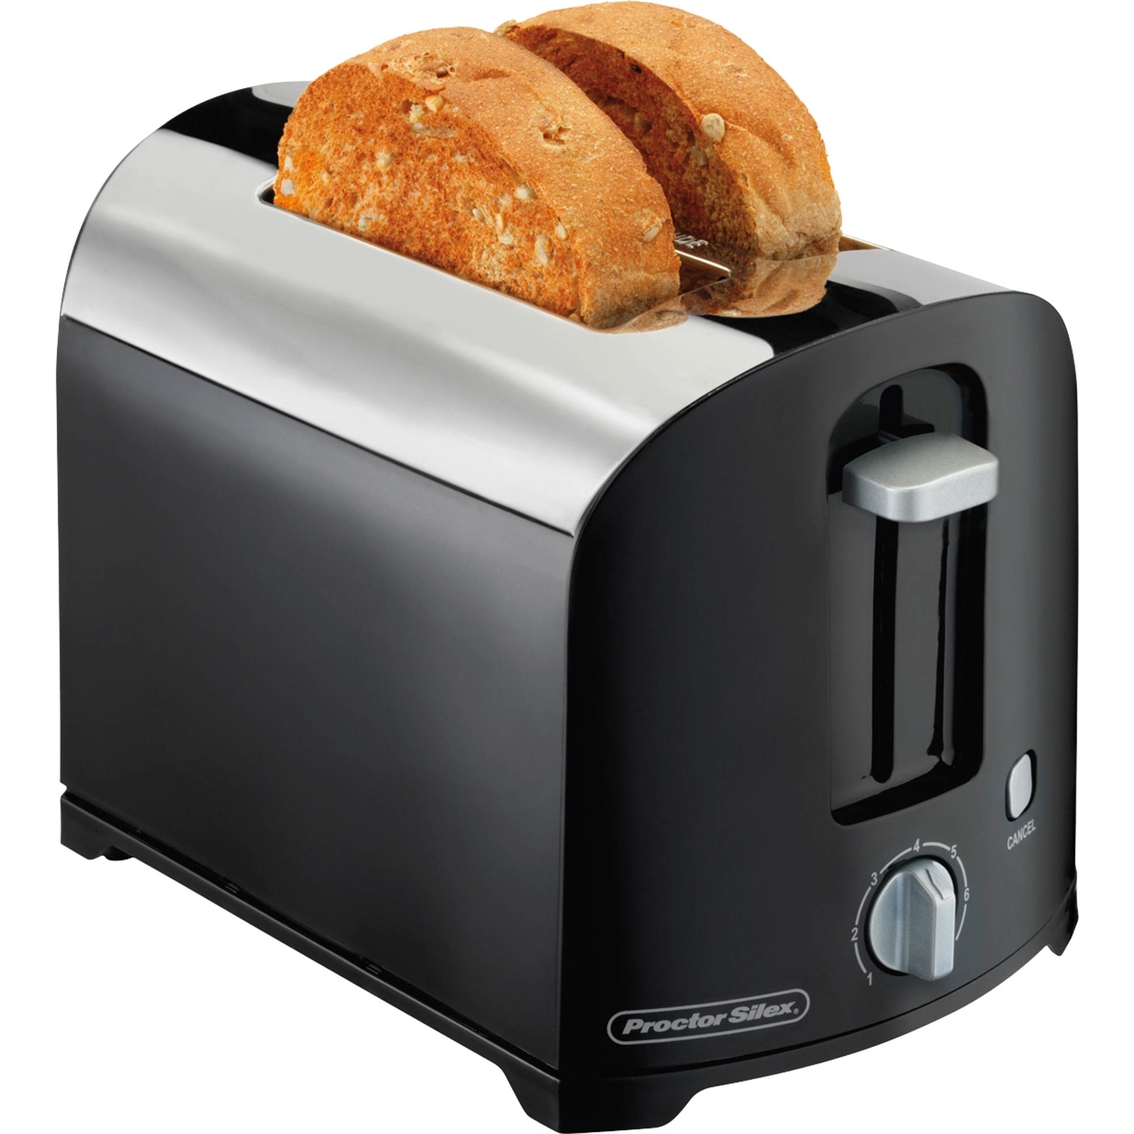 Hamilton Beach Proctor Silex 2 Slot Toaster